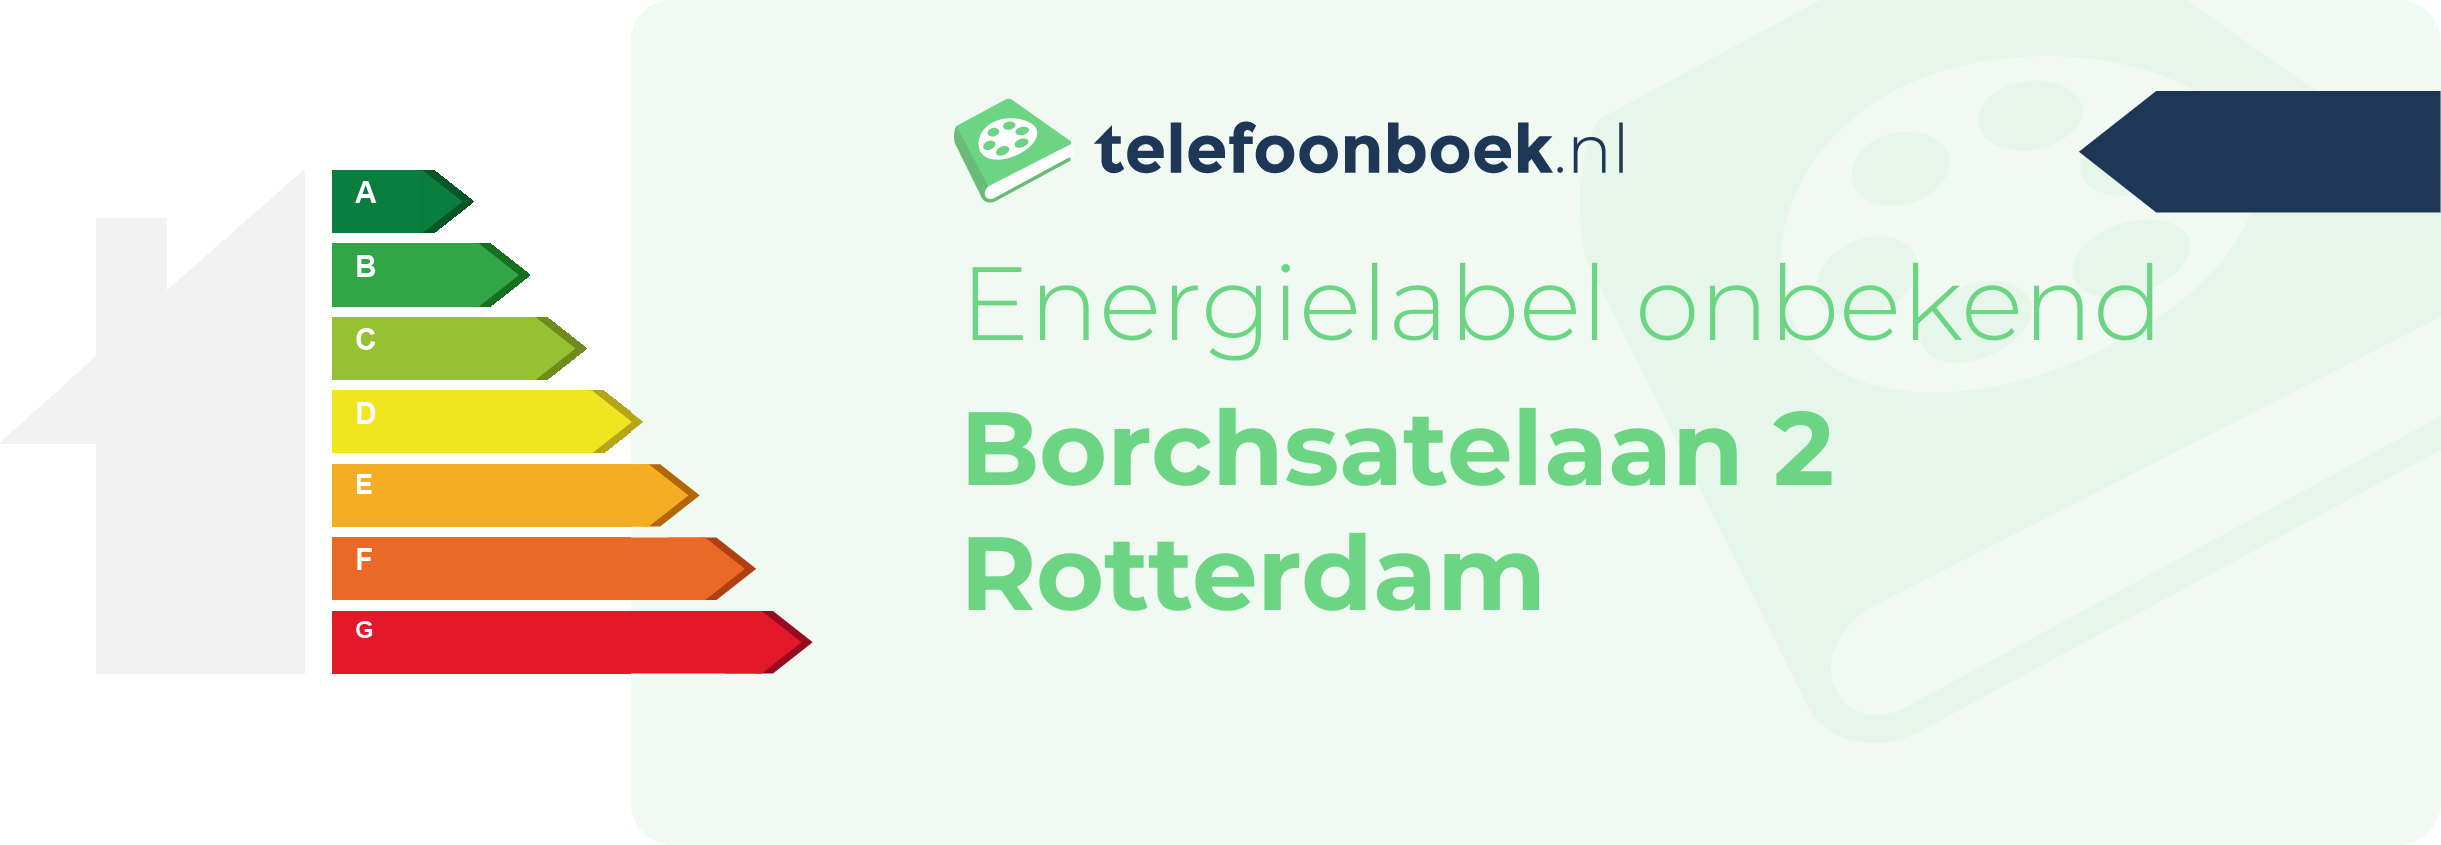 Energielabel Borchsatelaan 2 Rotterdam